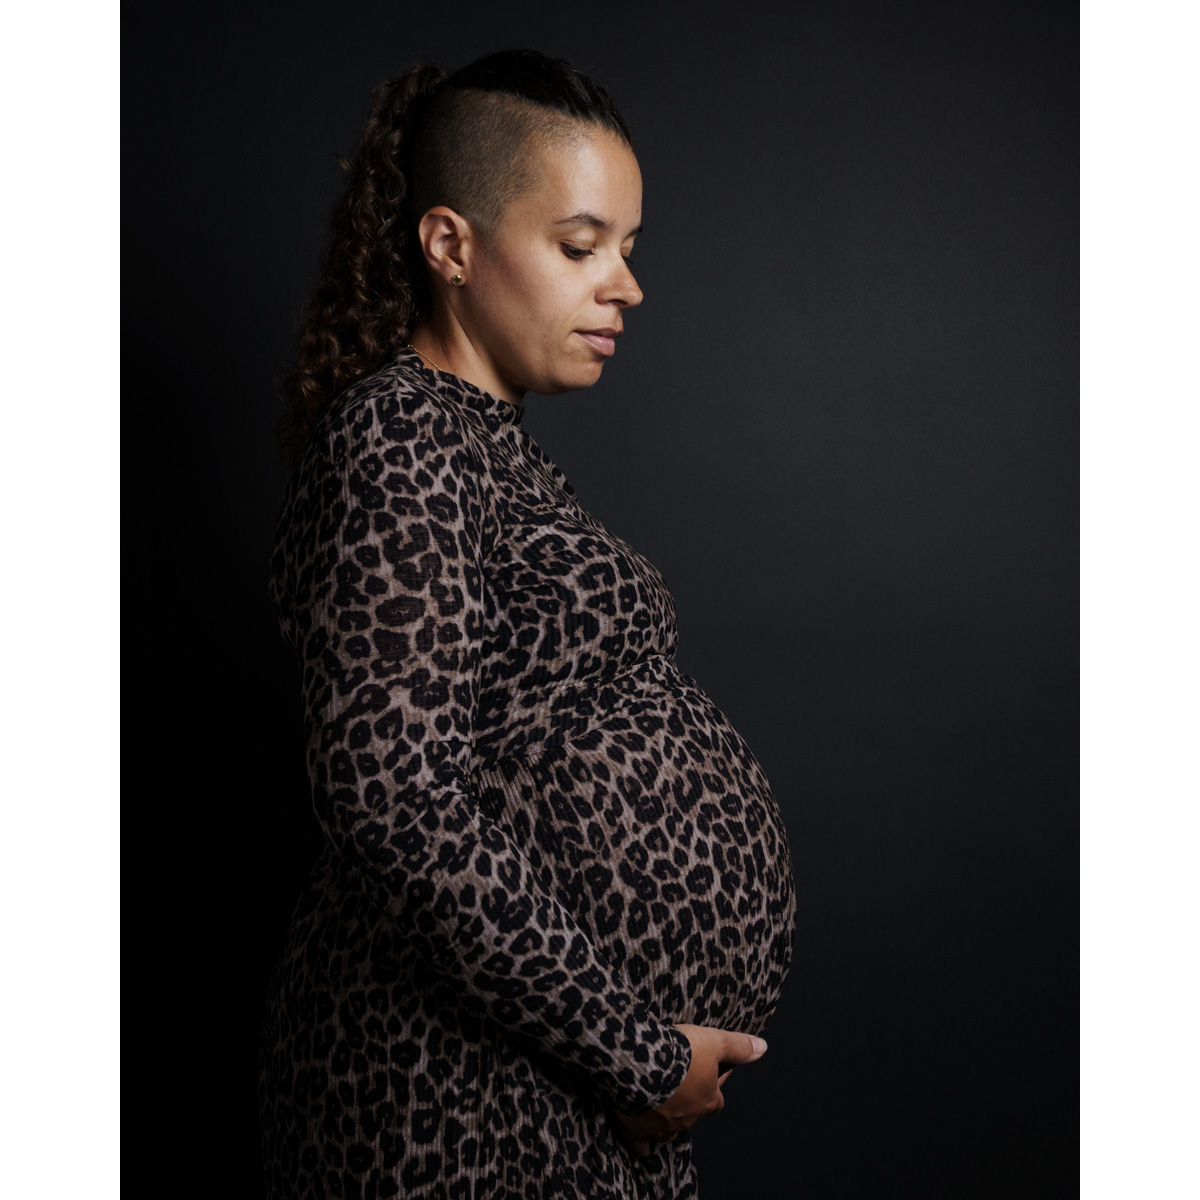 gravideportræt fotografi Brit Windahl